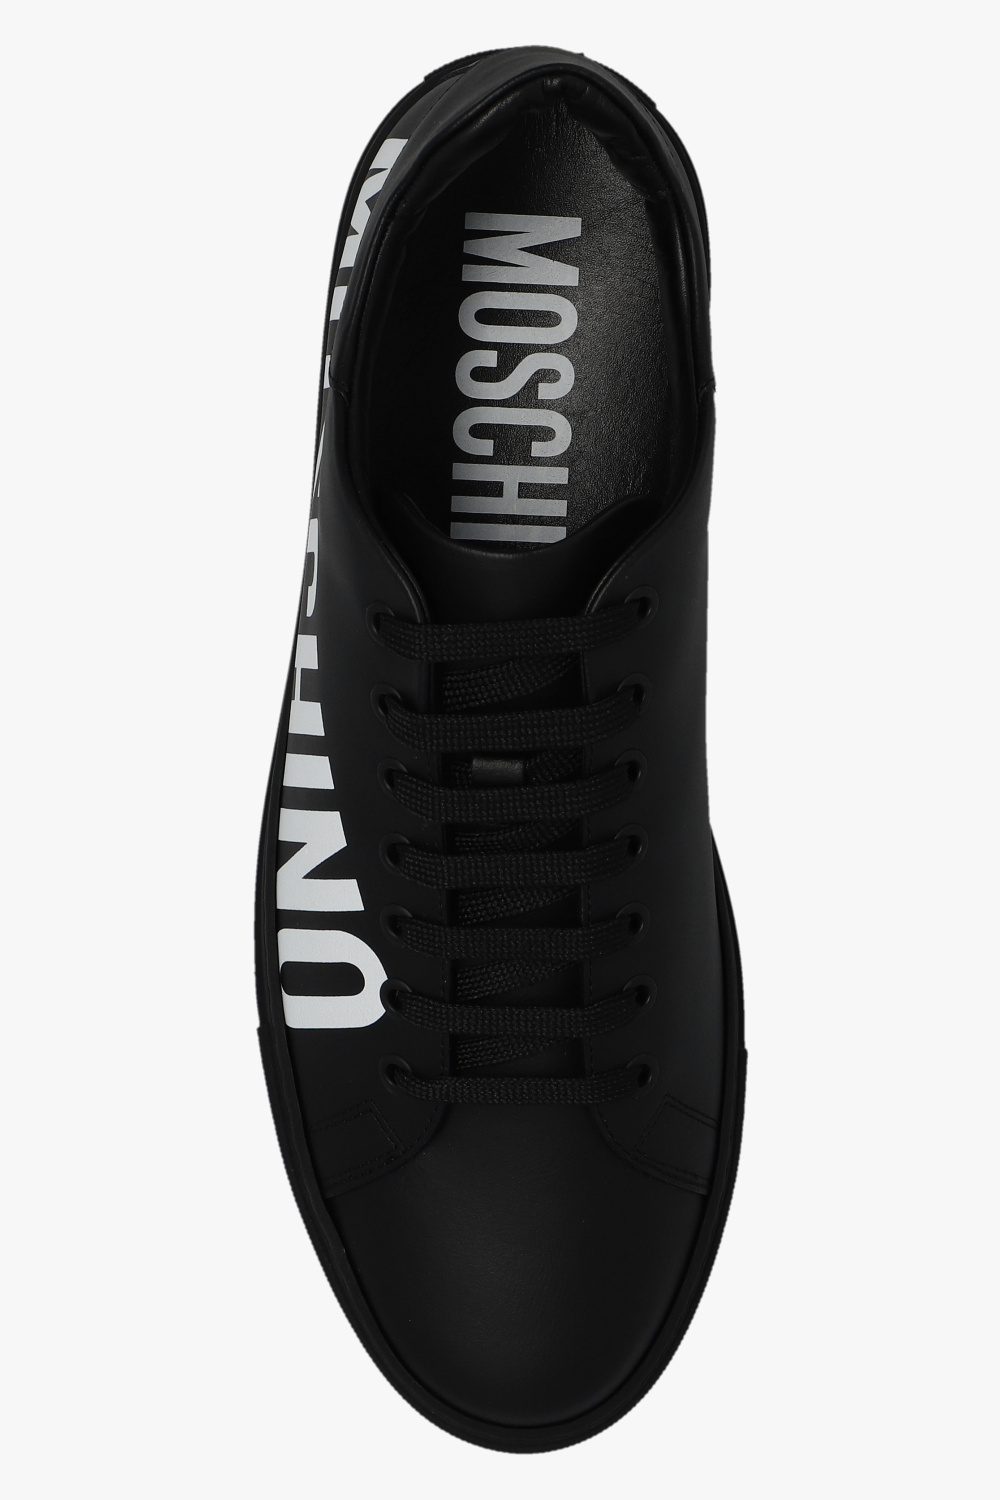 Moschino adidas yeezy foam rnnr sneakers